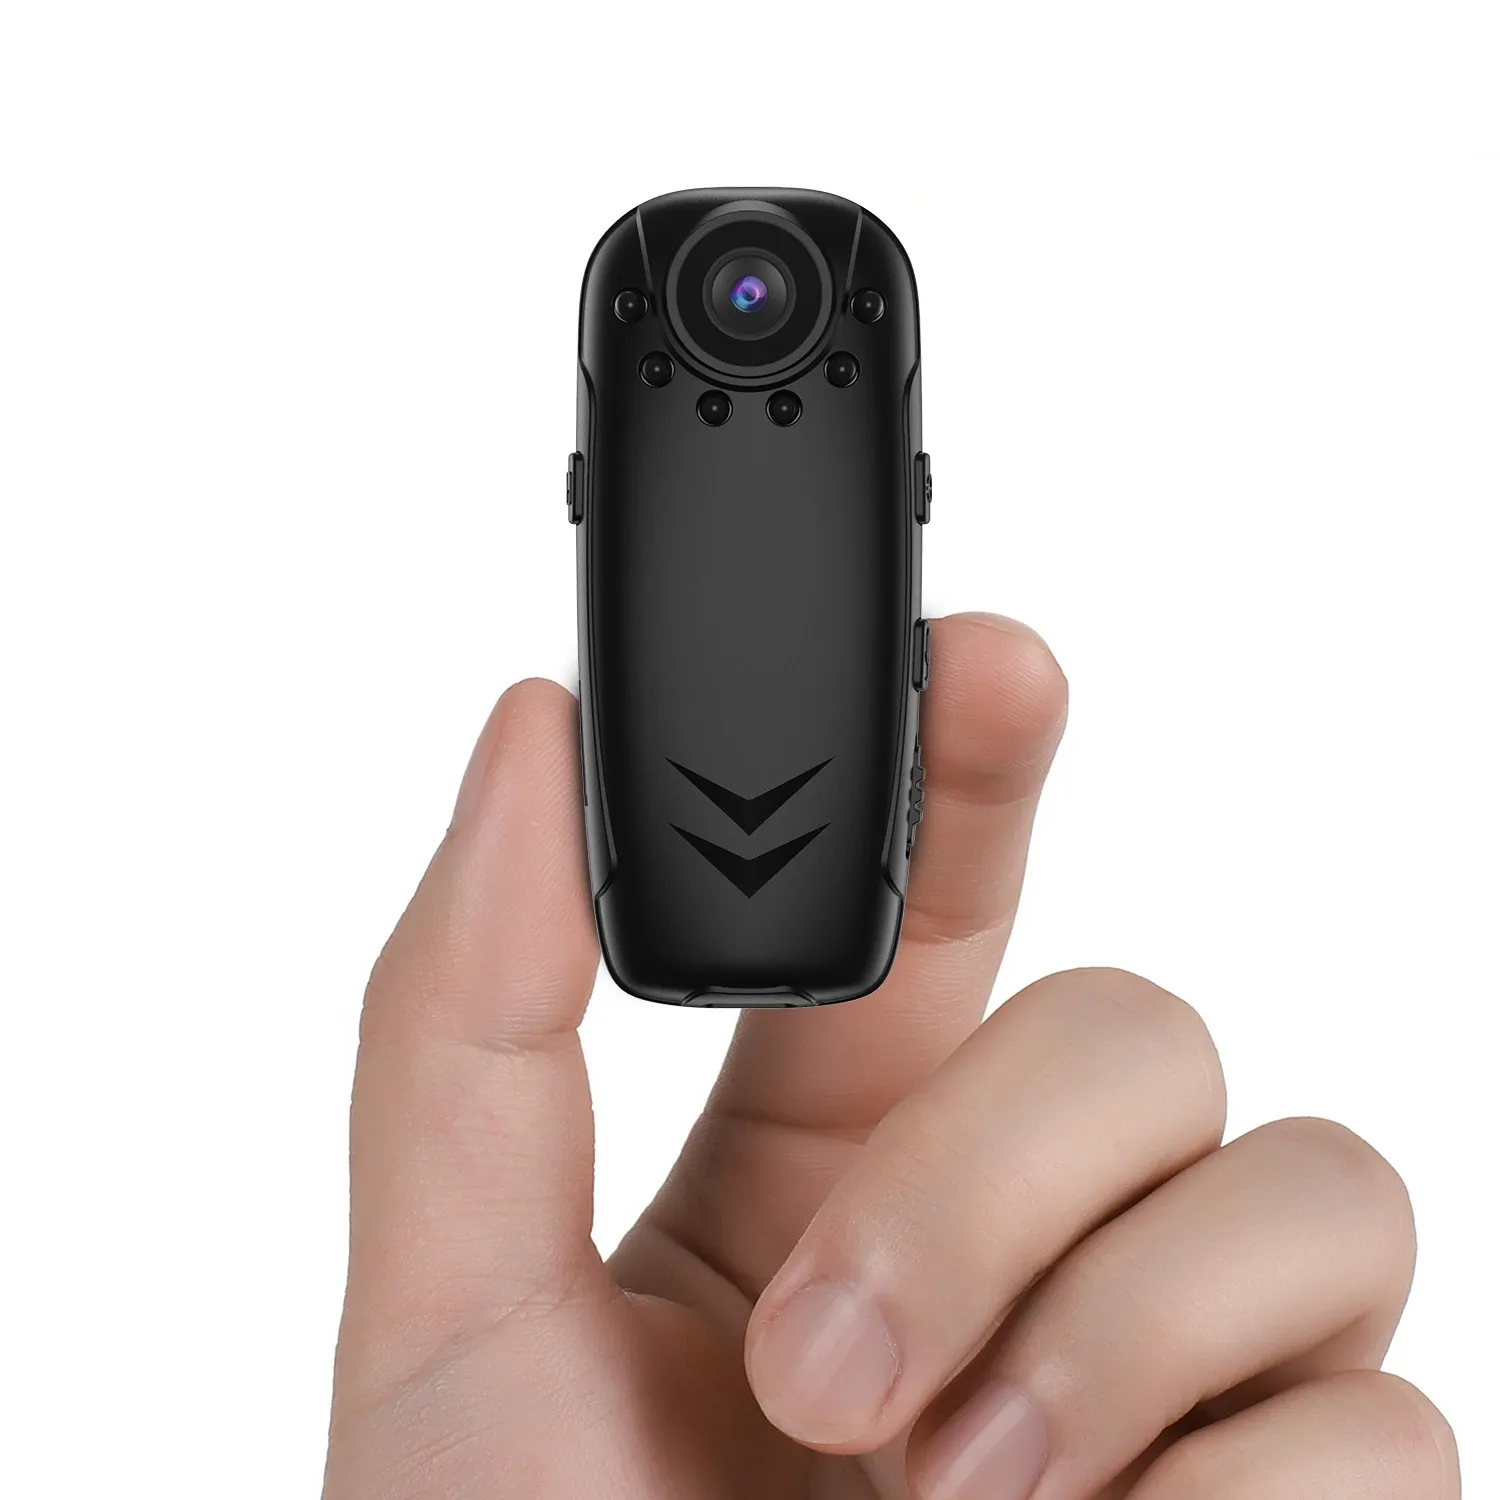 Cameras Mini HD Action Camera Portable Body Cam 1080p Infrared Night Vision Voice Video Recording Sport DV Clips Small Camcomorder Police